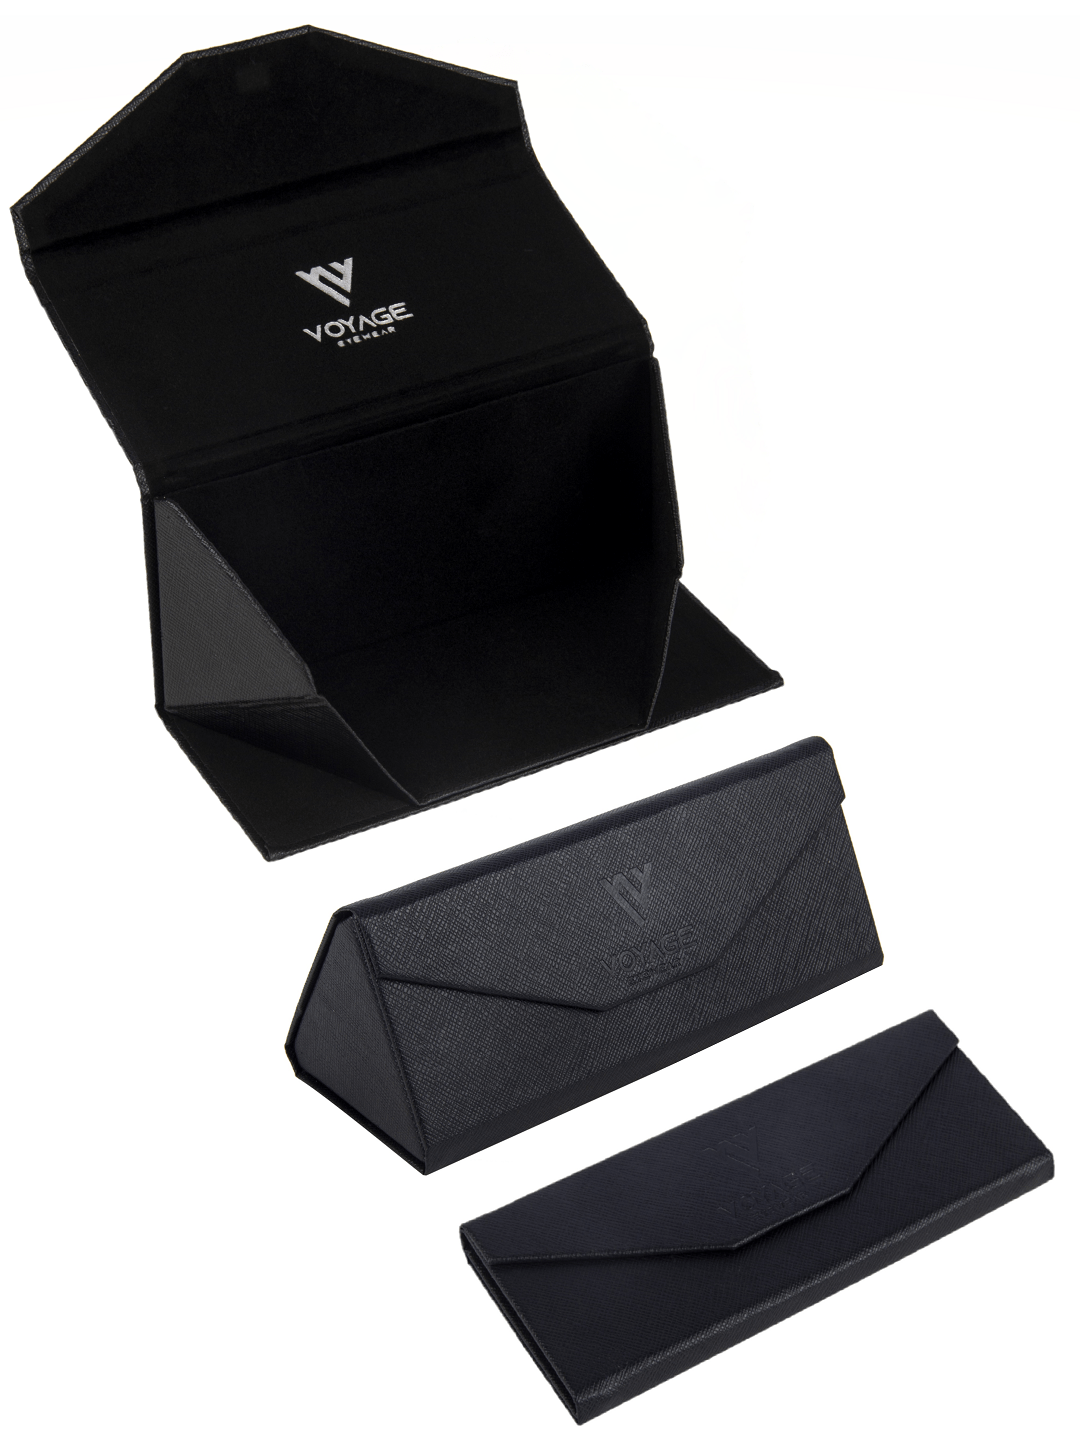 Voyage Exclusive Black & Silver Polarized Wayfarer Sunglasses for Men & Women - PMG4144